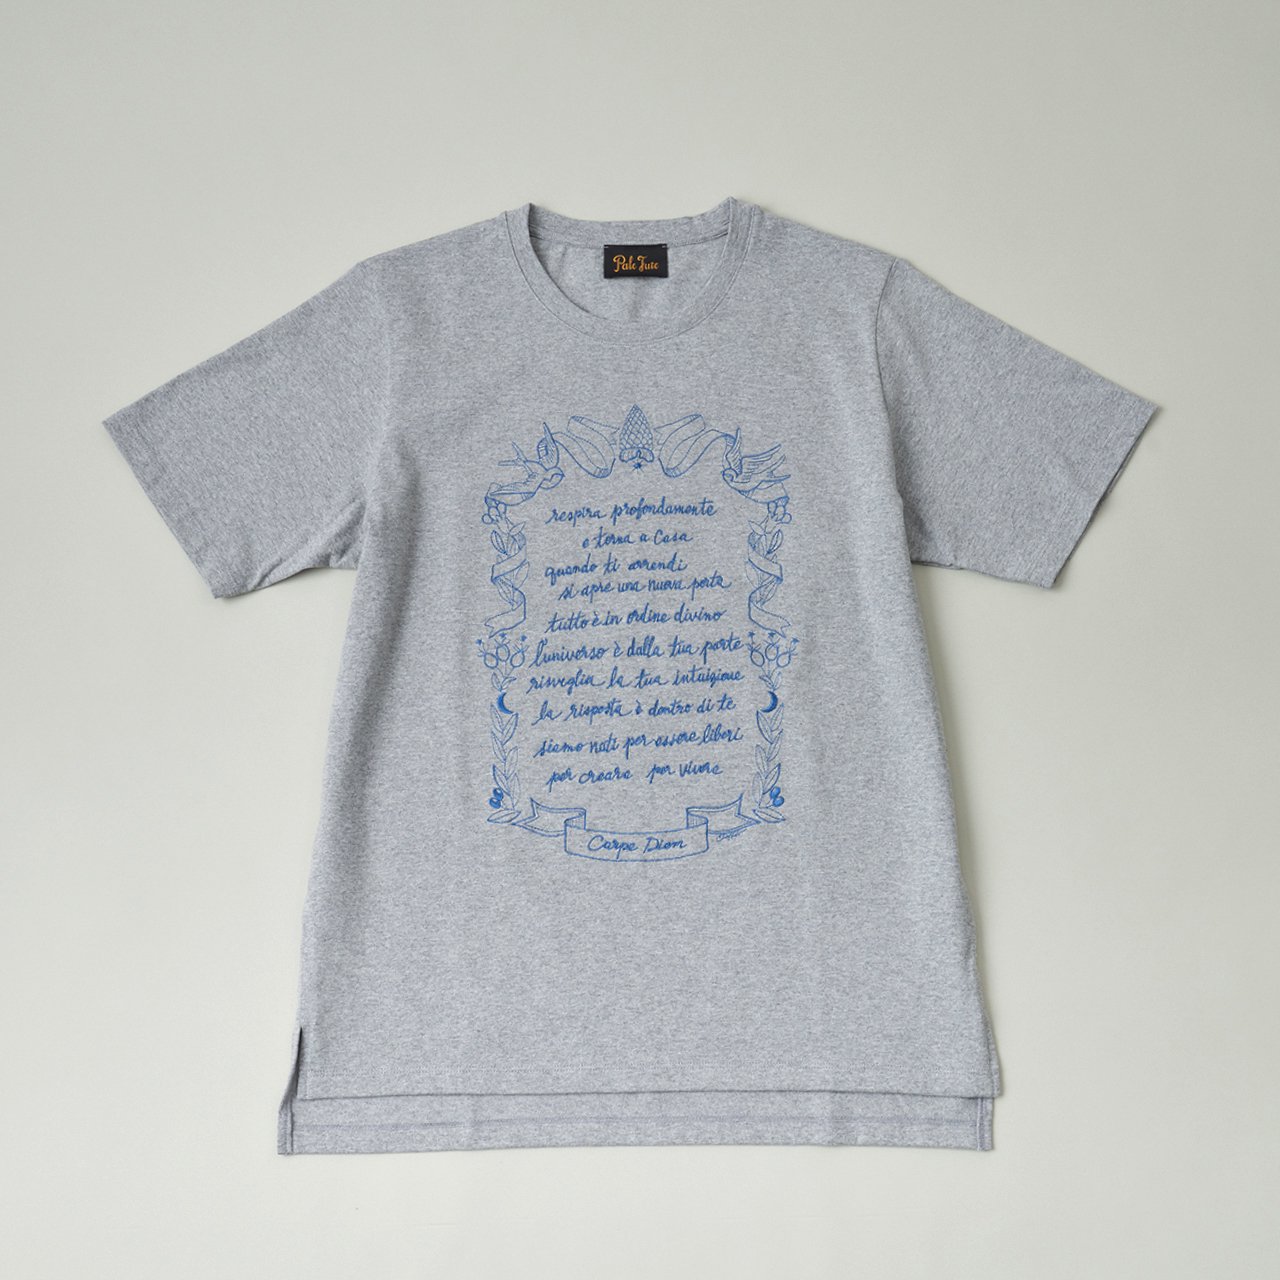 PaleJute<BR>Pale Jute  Chizu Kobayashi
embroidery T-shirt<BR>gray  sax